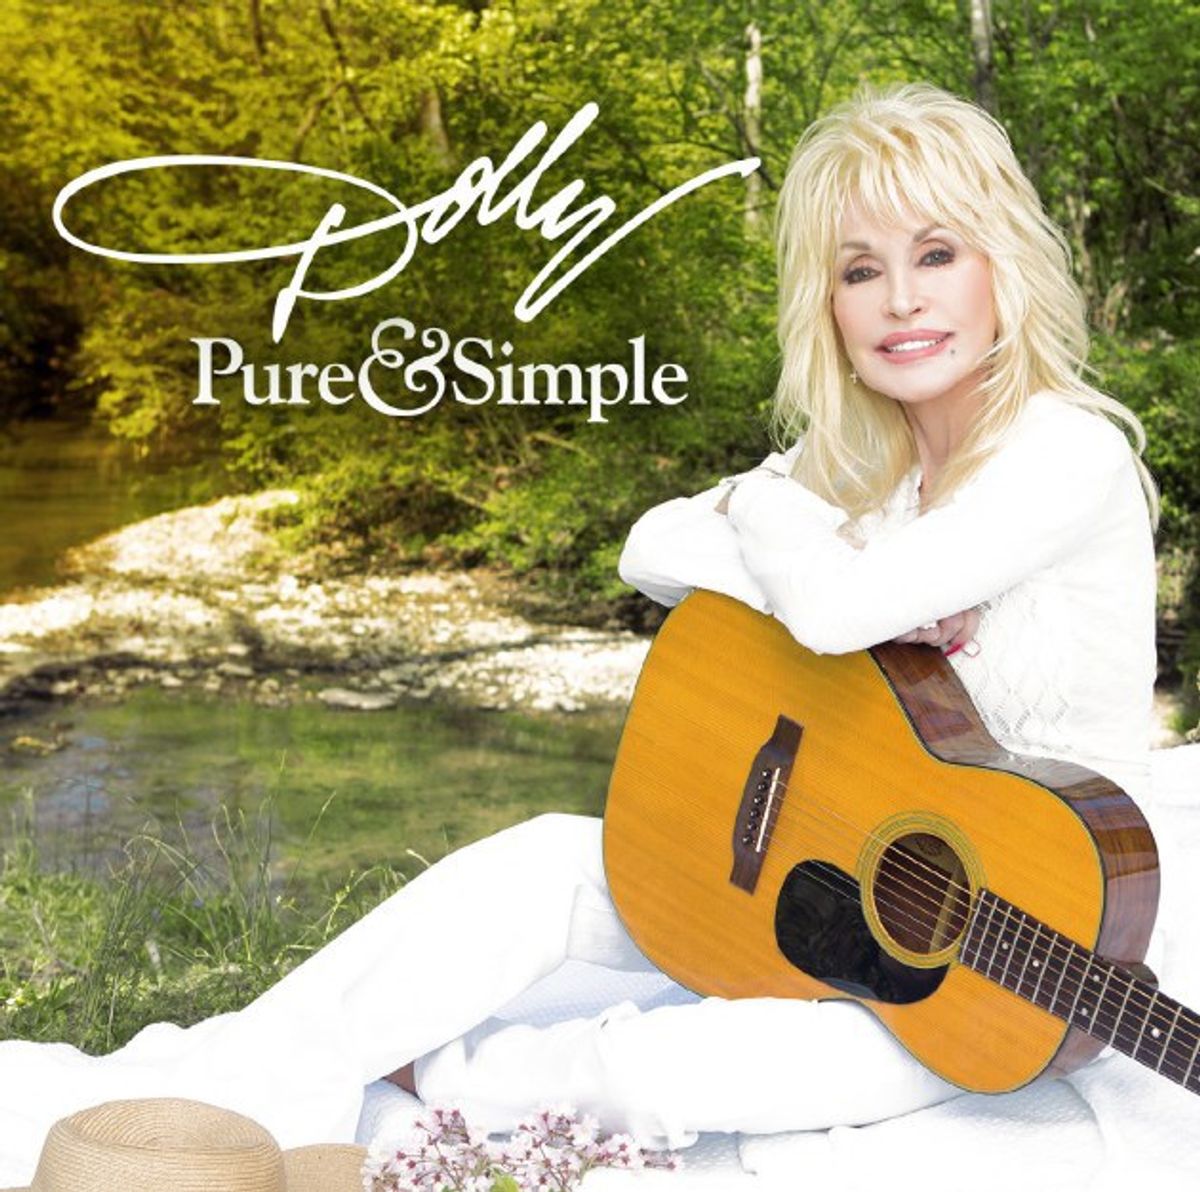 Dolly Parton's "Pure & Simple" Tour 2016 Review